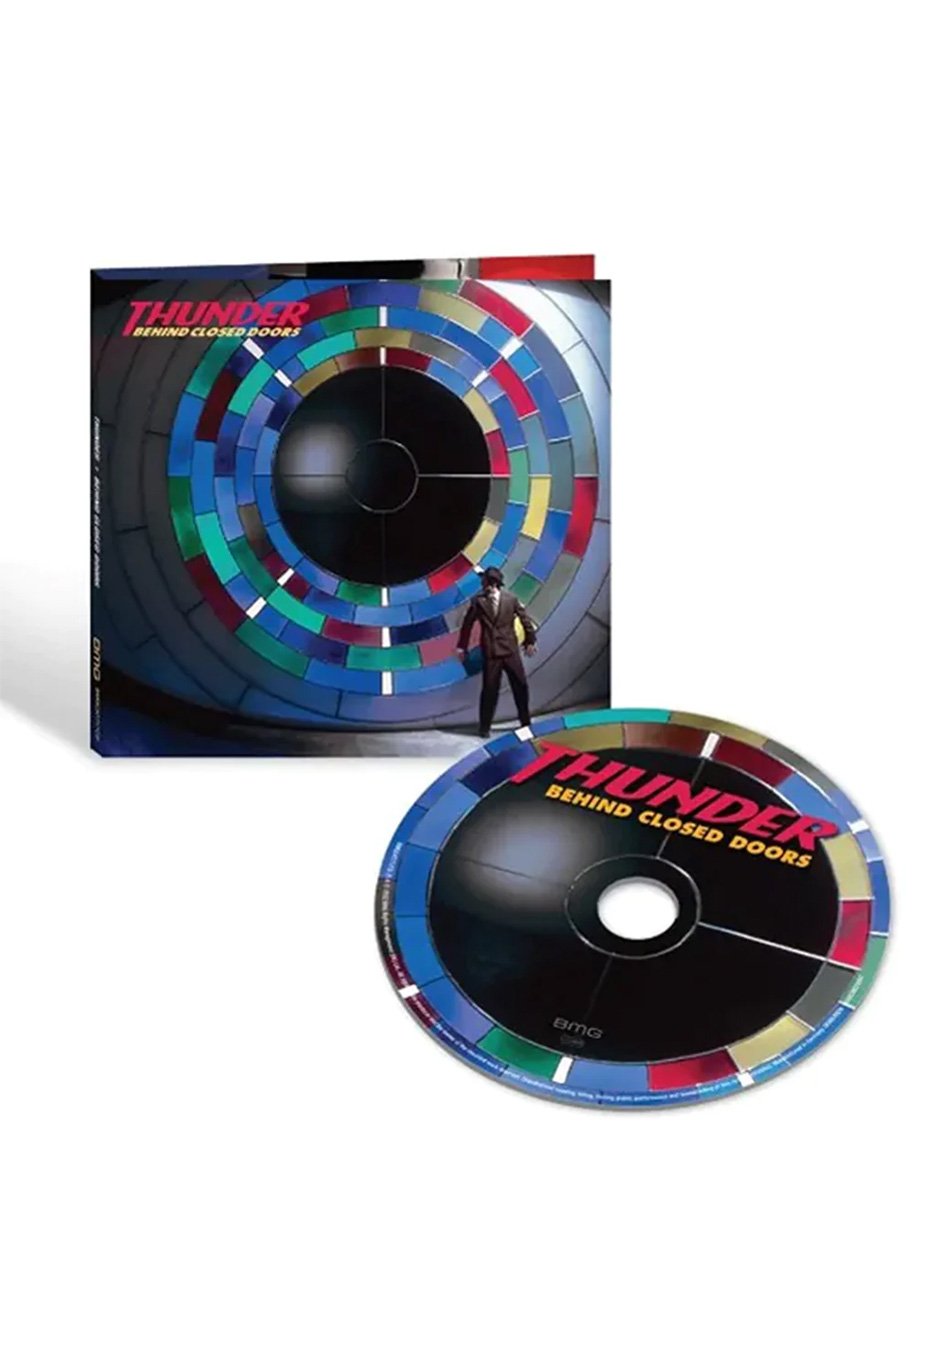 Thunder - Behind Closed Doors (Expanded Version) - Digipak CD